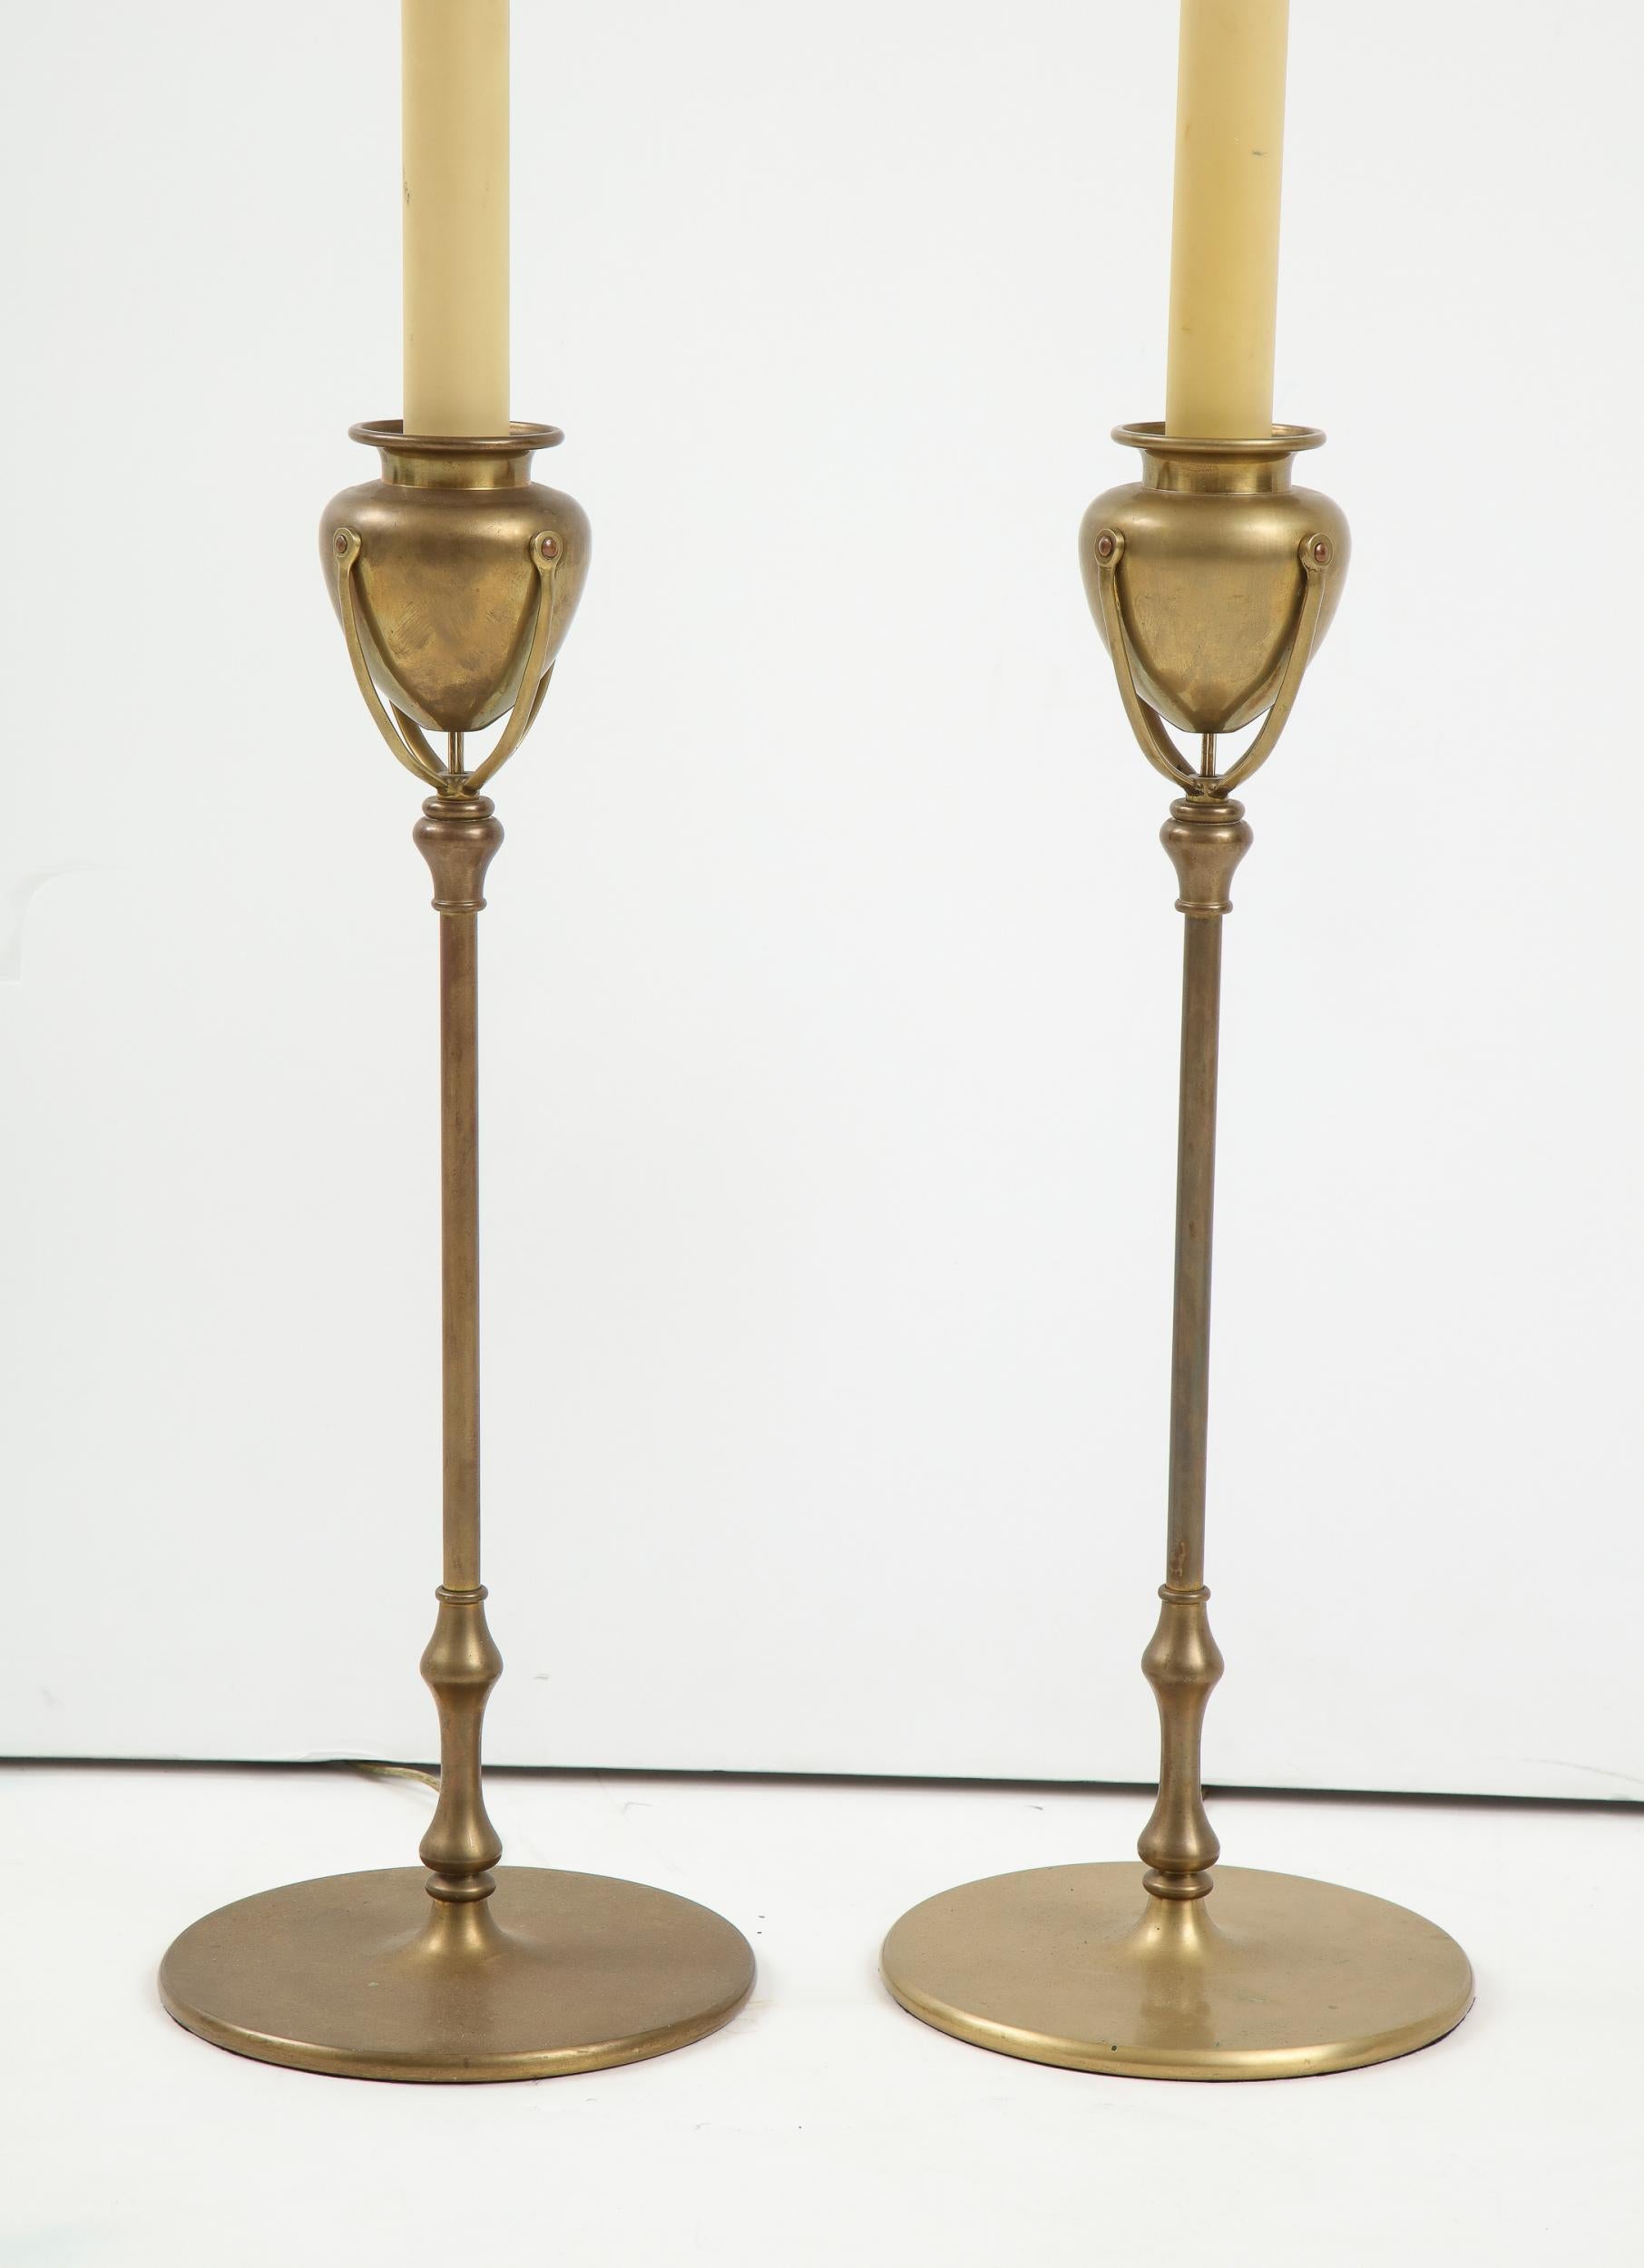 American Pair of Louis Comfort Tiffany Inspired Lamps